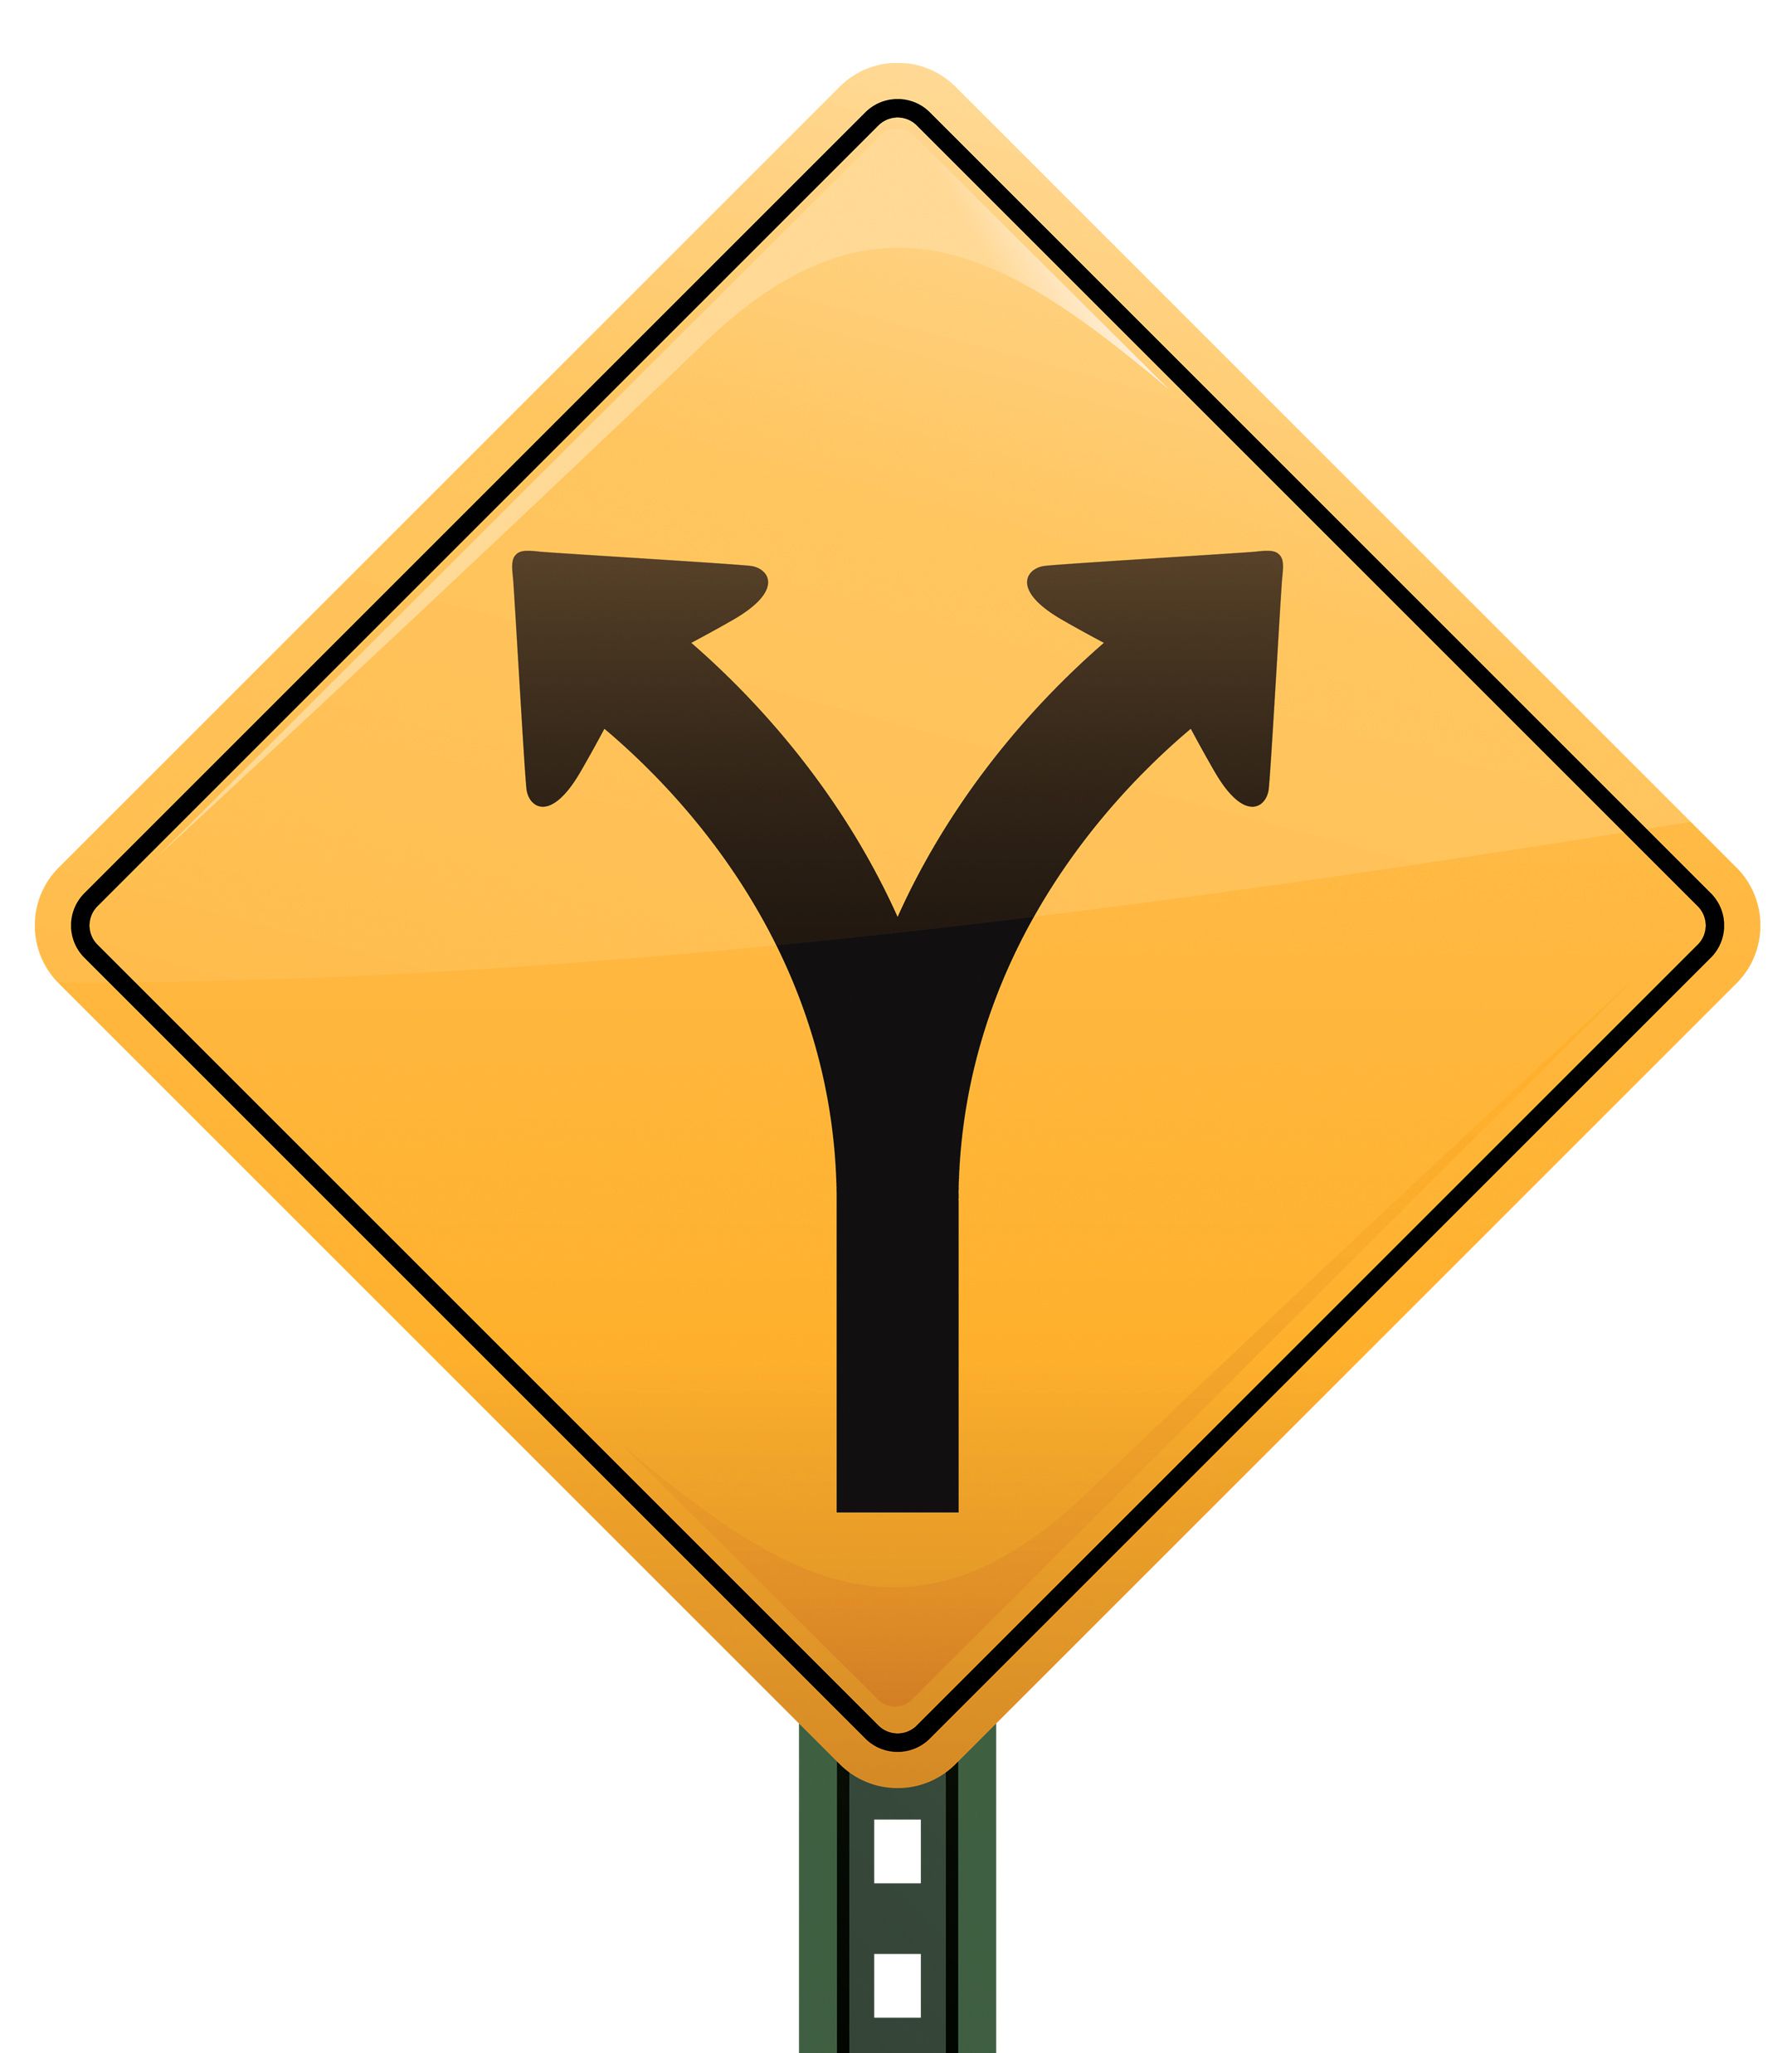 Split road sign